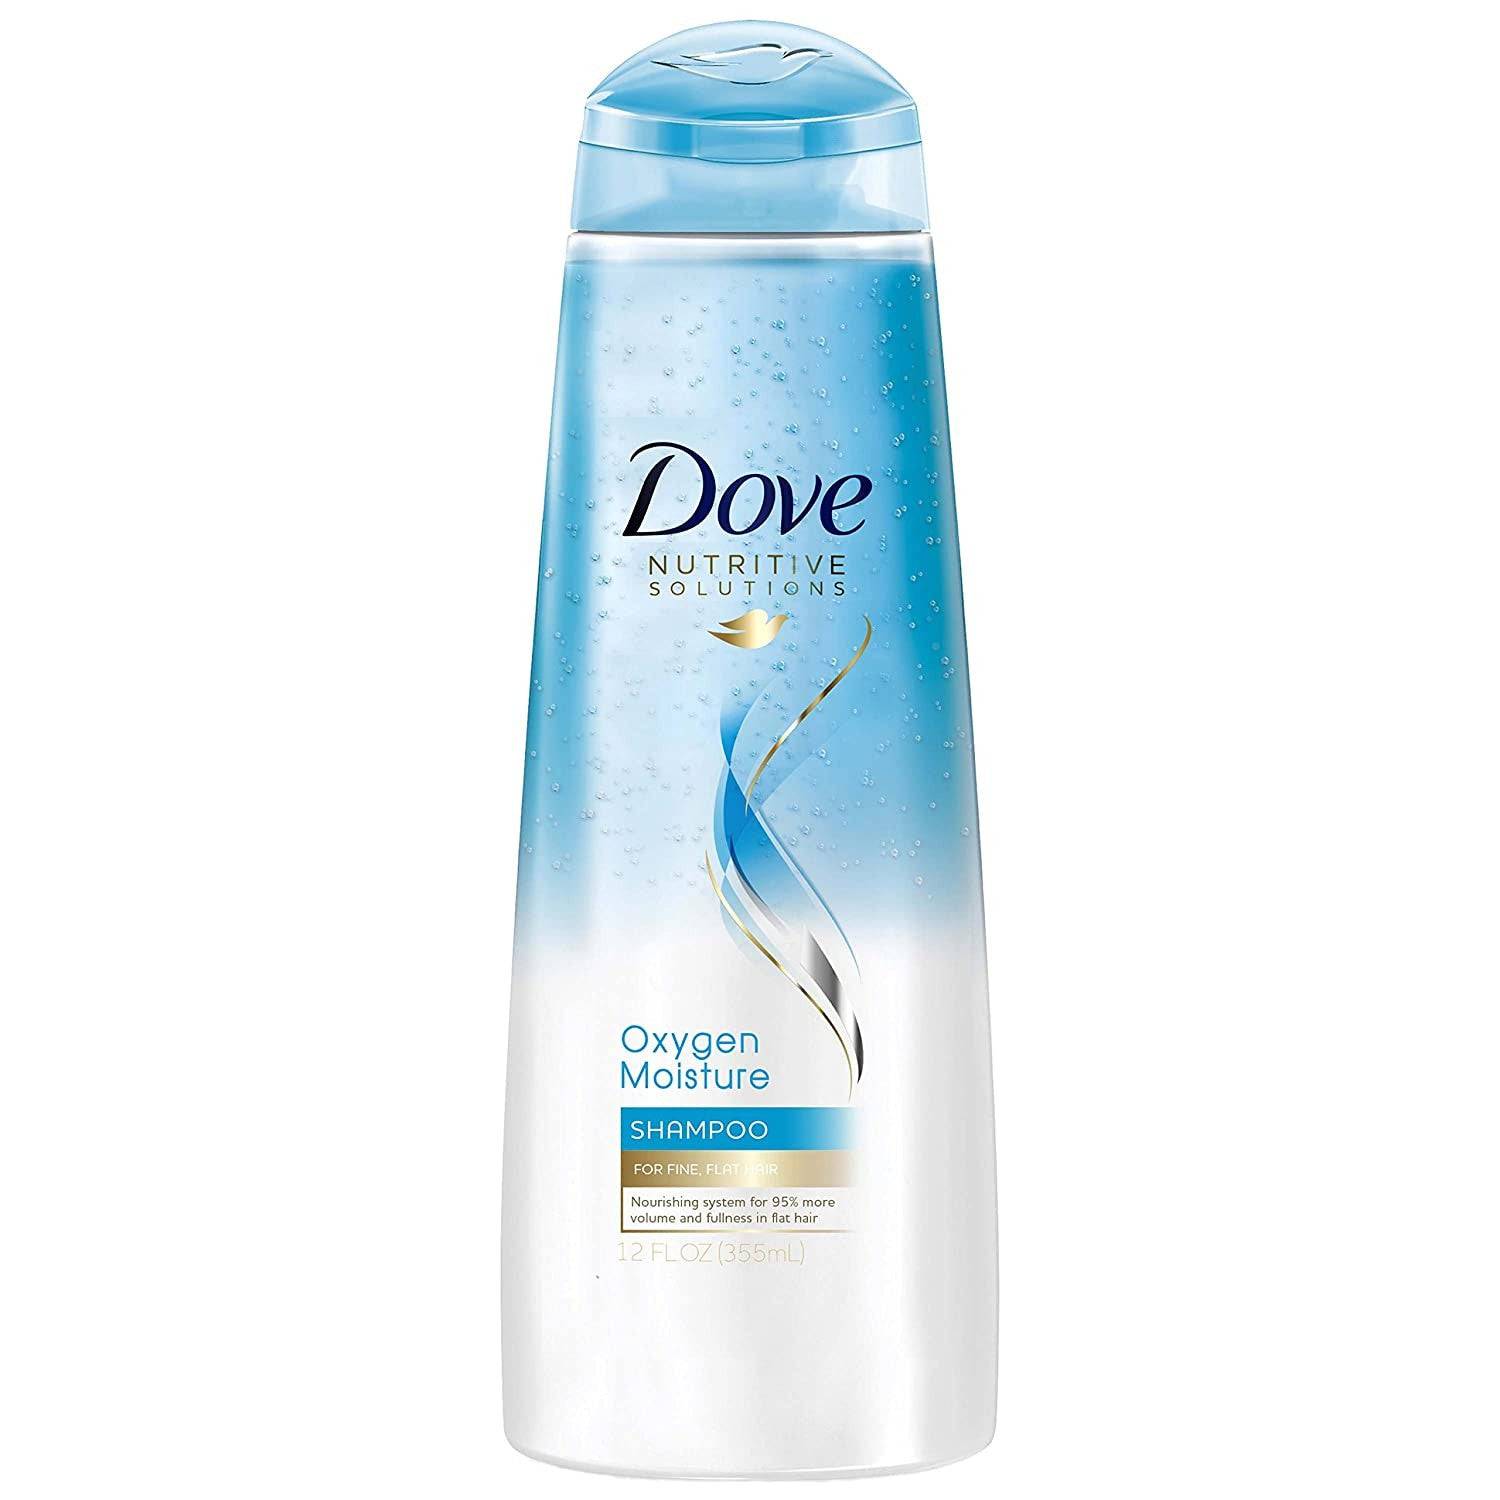 Dove Nutritive Solutions Shampoo Usa Oxygen Moisture 355Ml